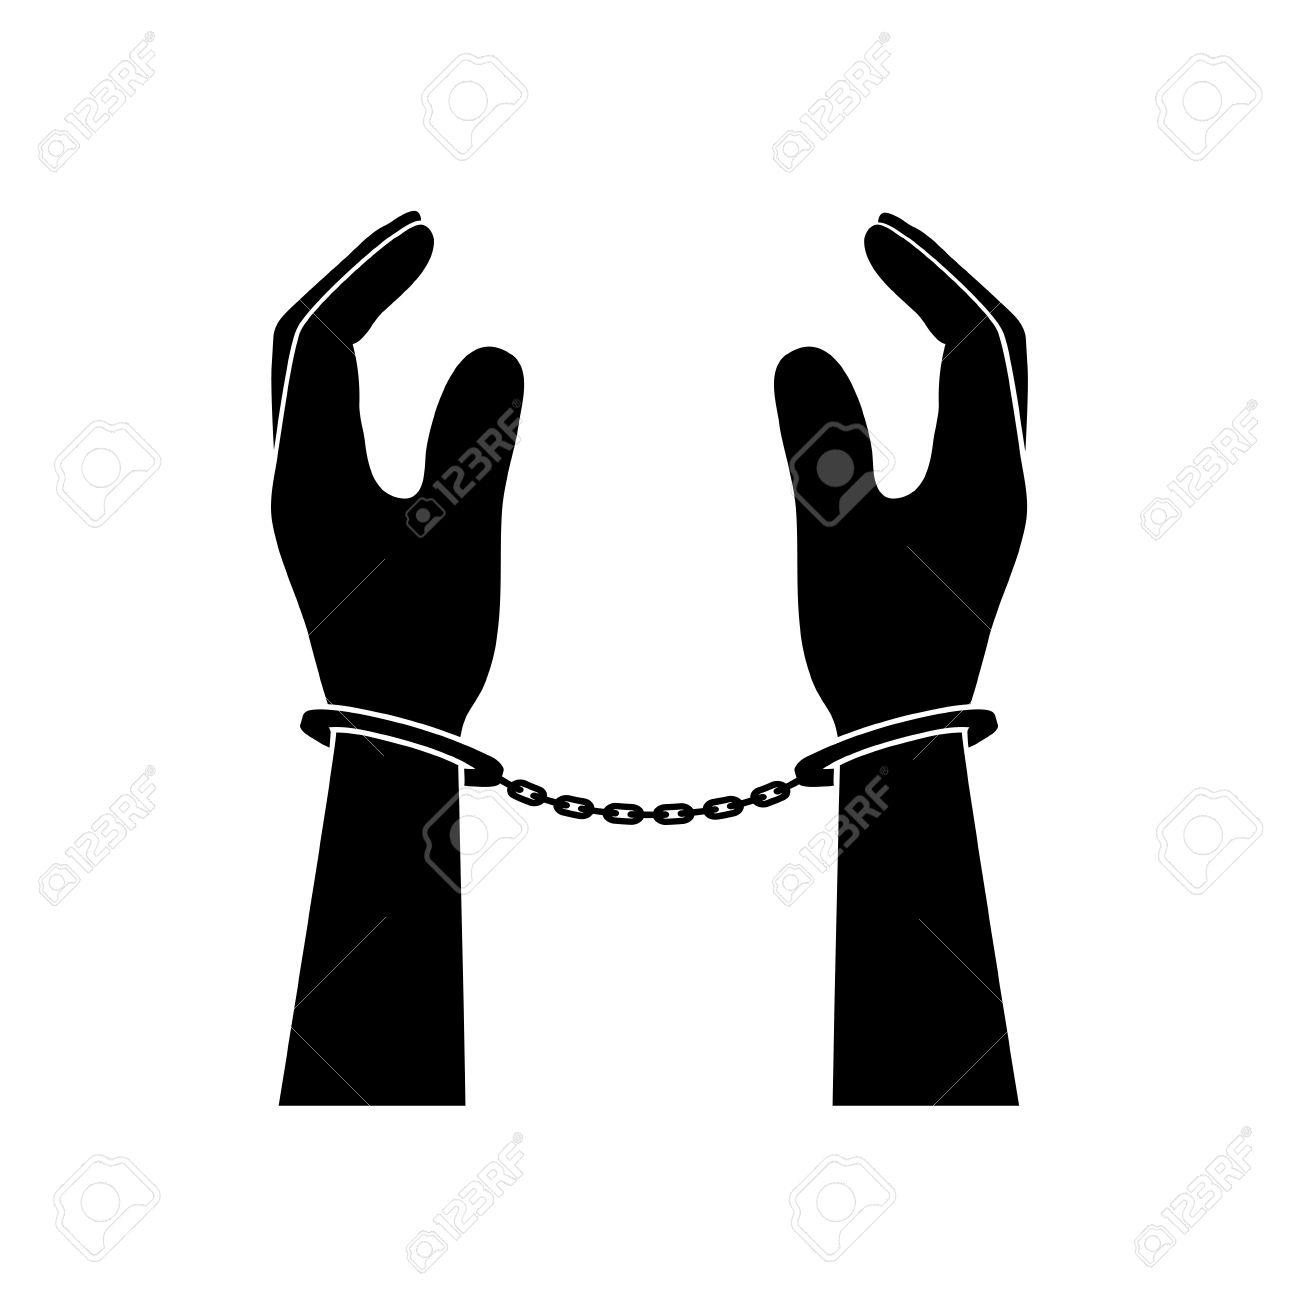 Handcuffs clipart cuffed hand. Cuffs cliparts free download